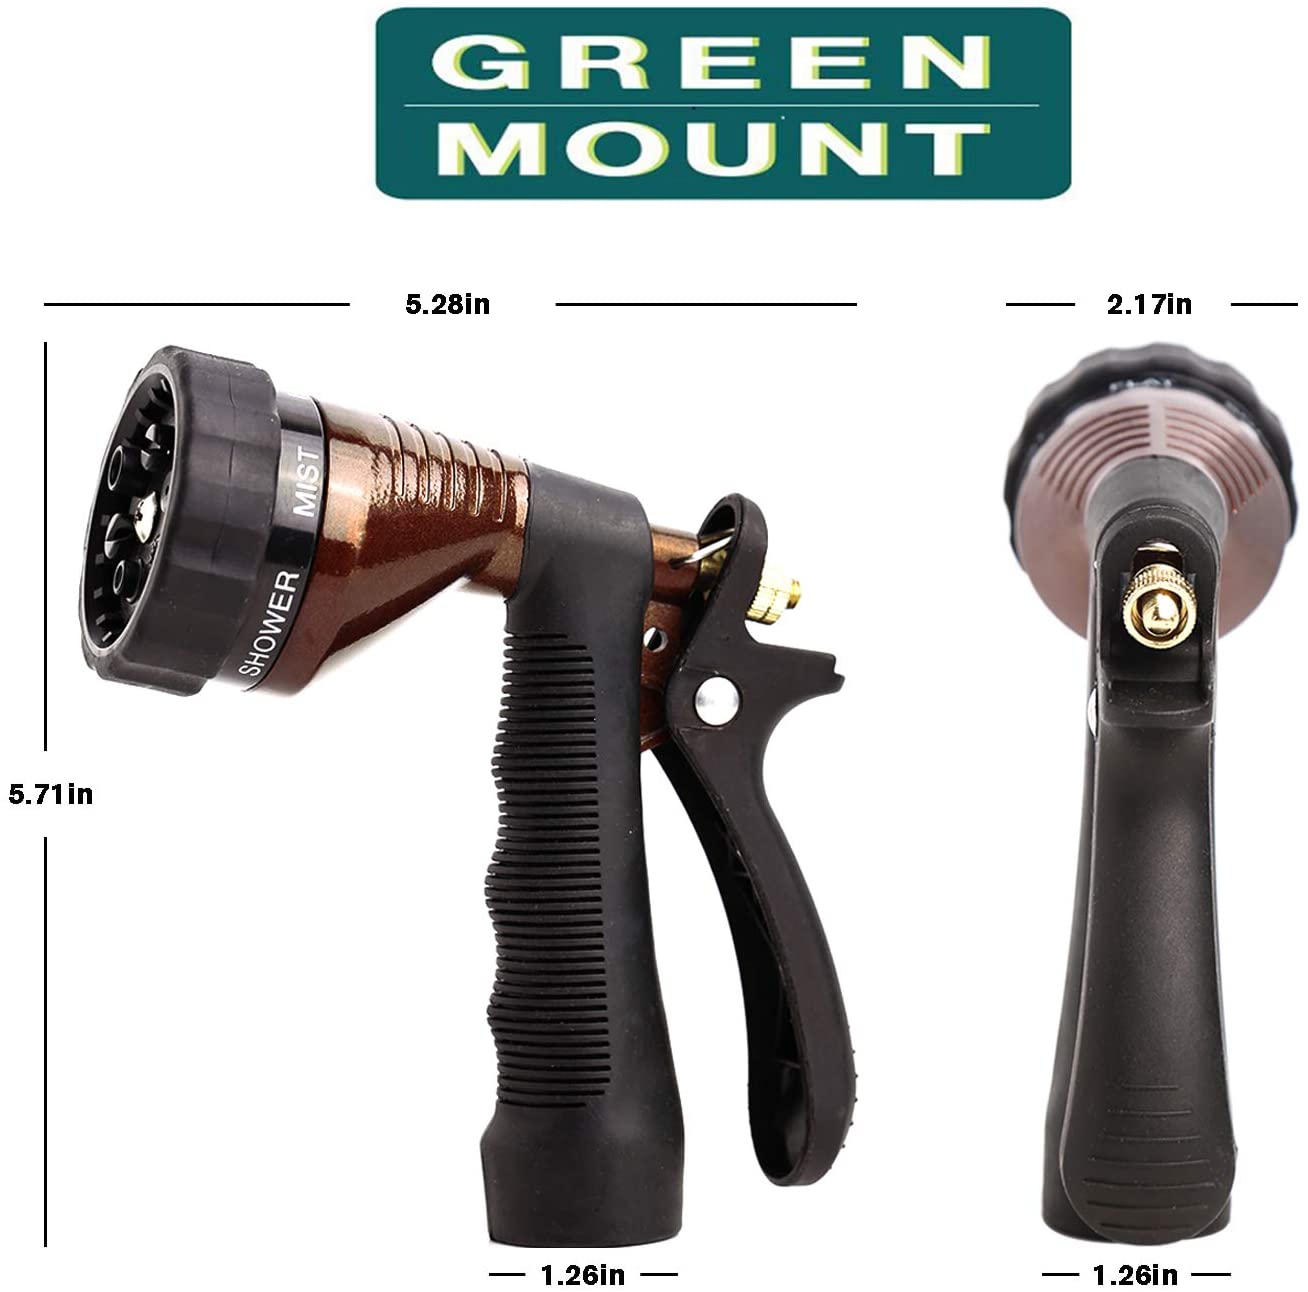 GREEN MOUNT Metal Garden Hose Nozzle with Adjustable Spray Patterns (B